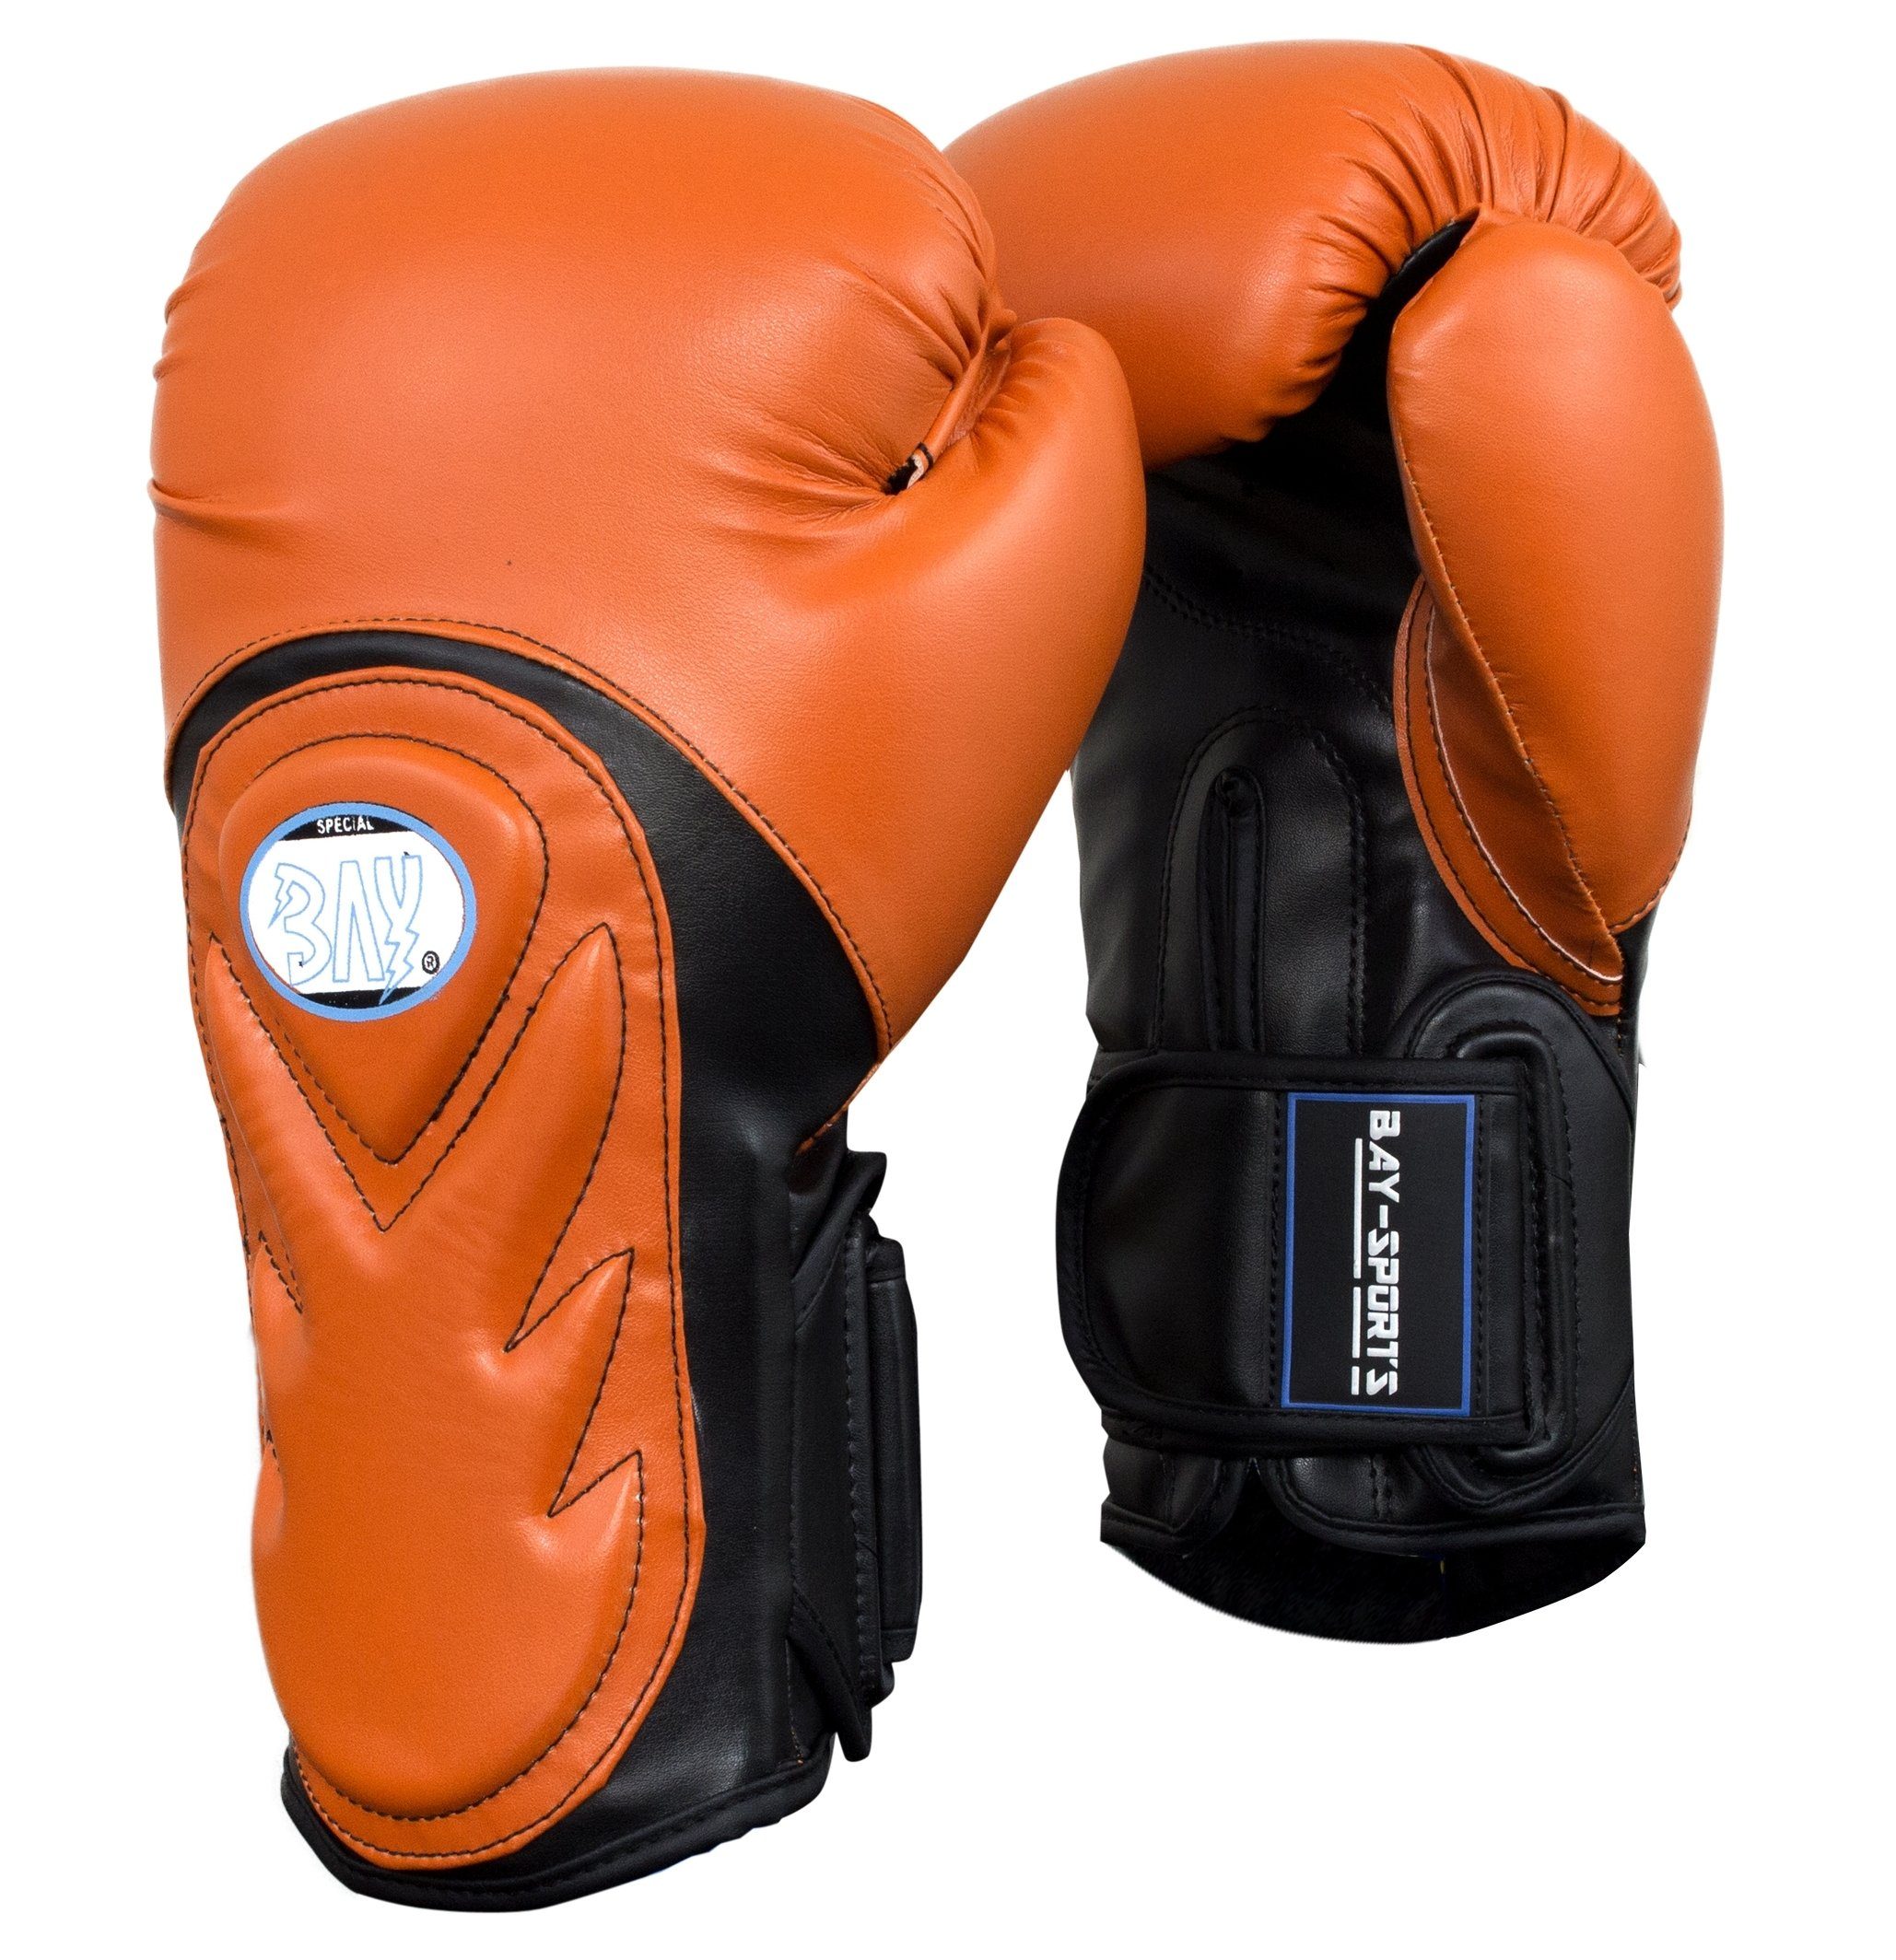 Box-Handschuhe Boxen BAY-Sports Bad Style Boxhandschuhe orange/schwarz